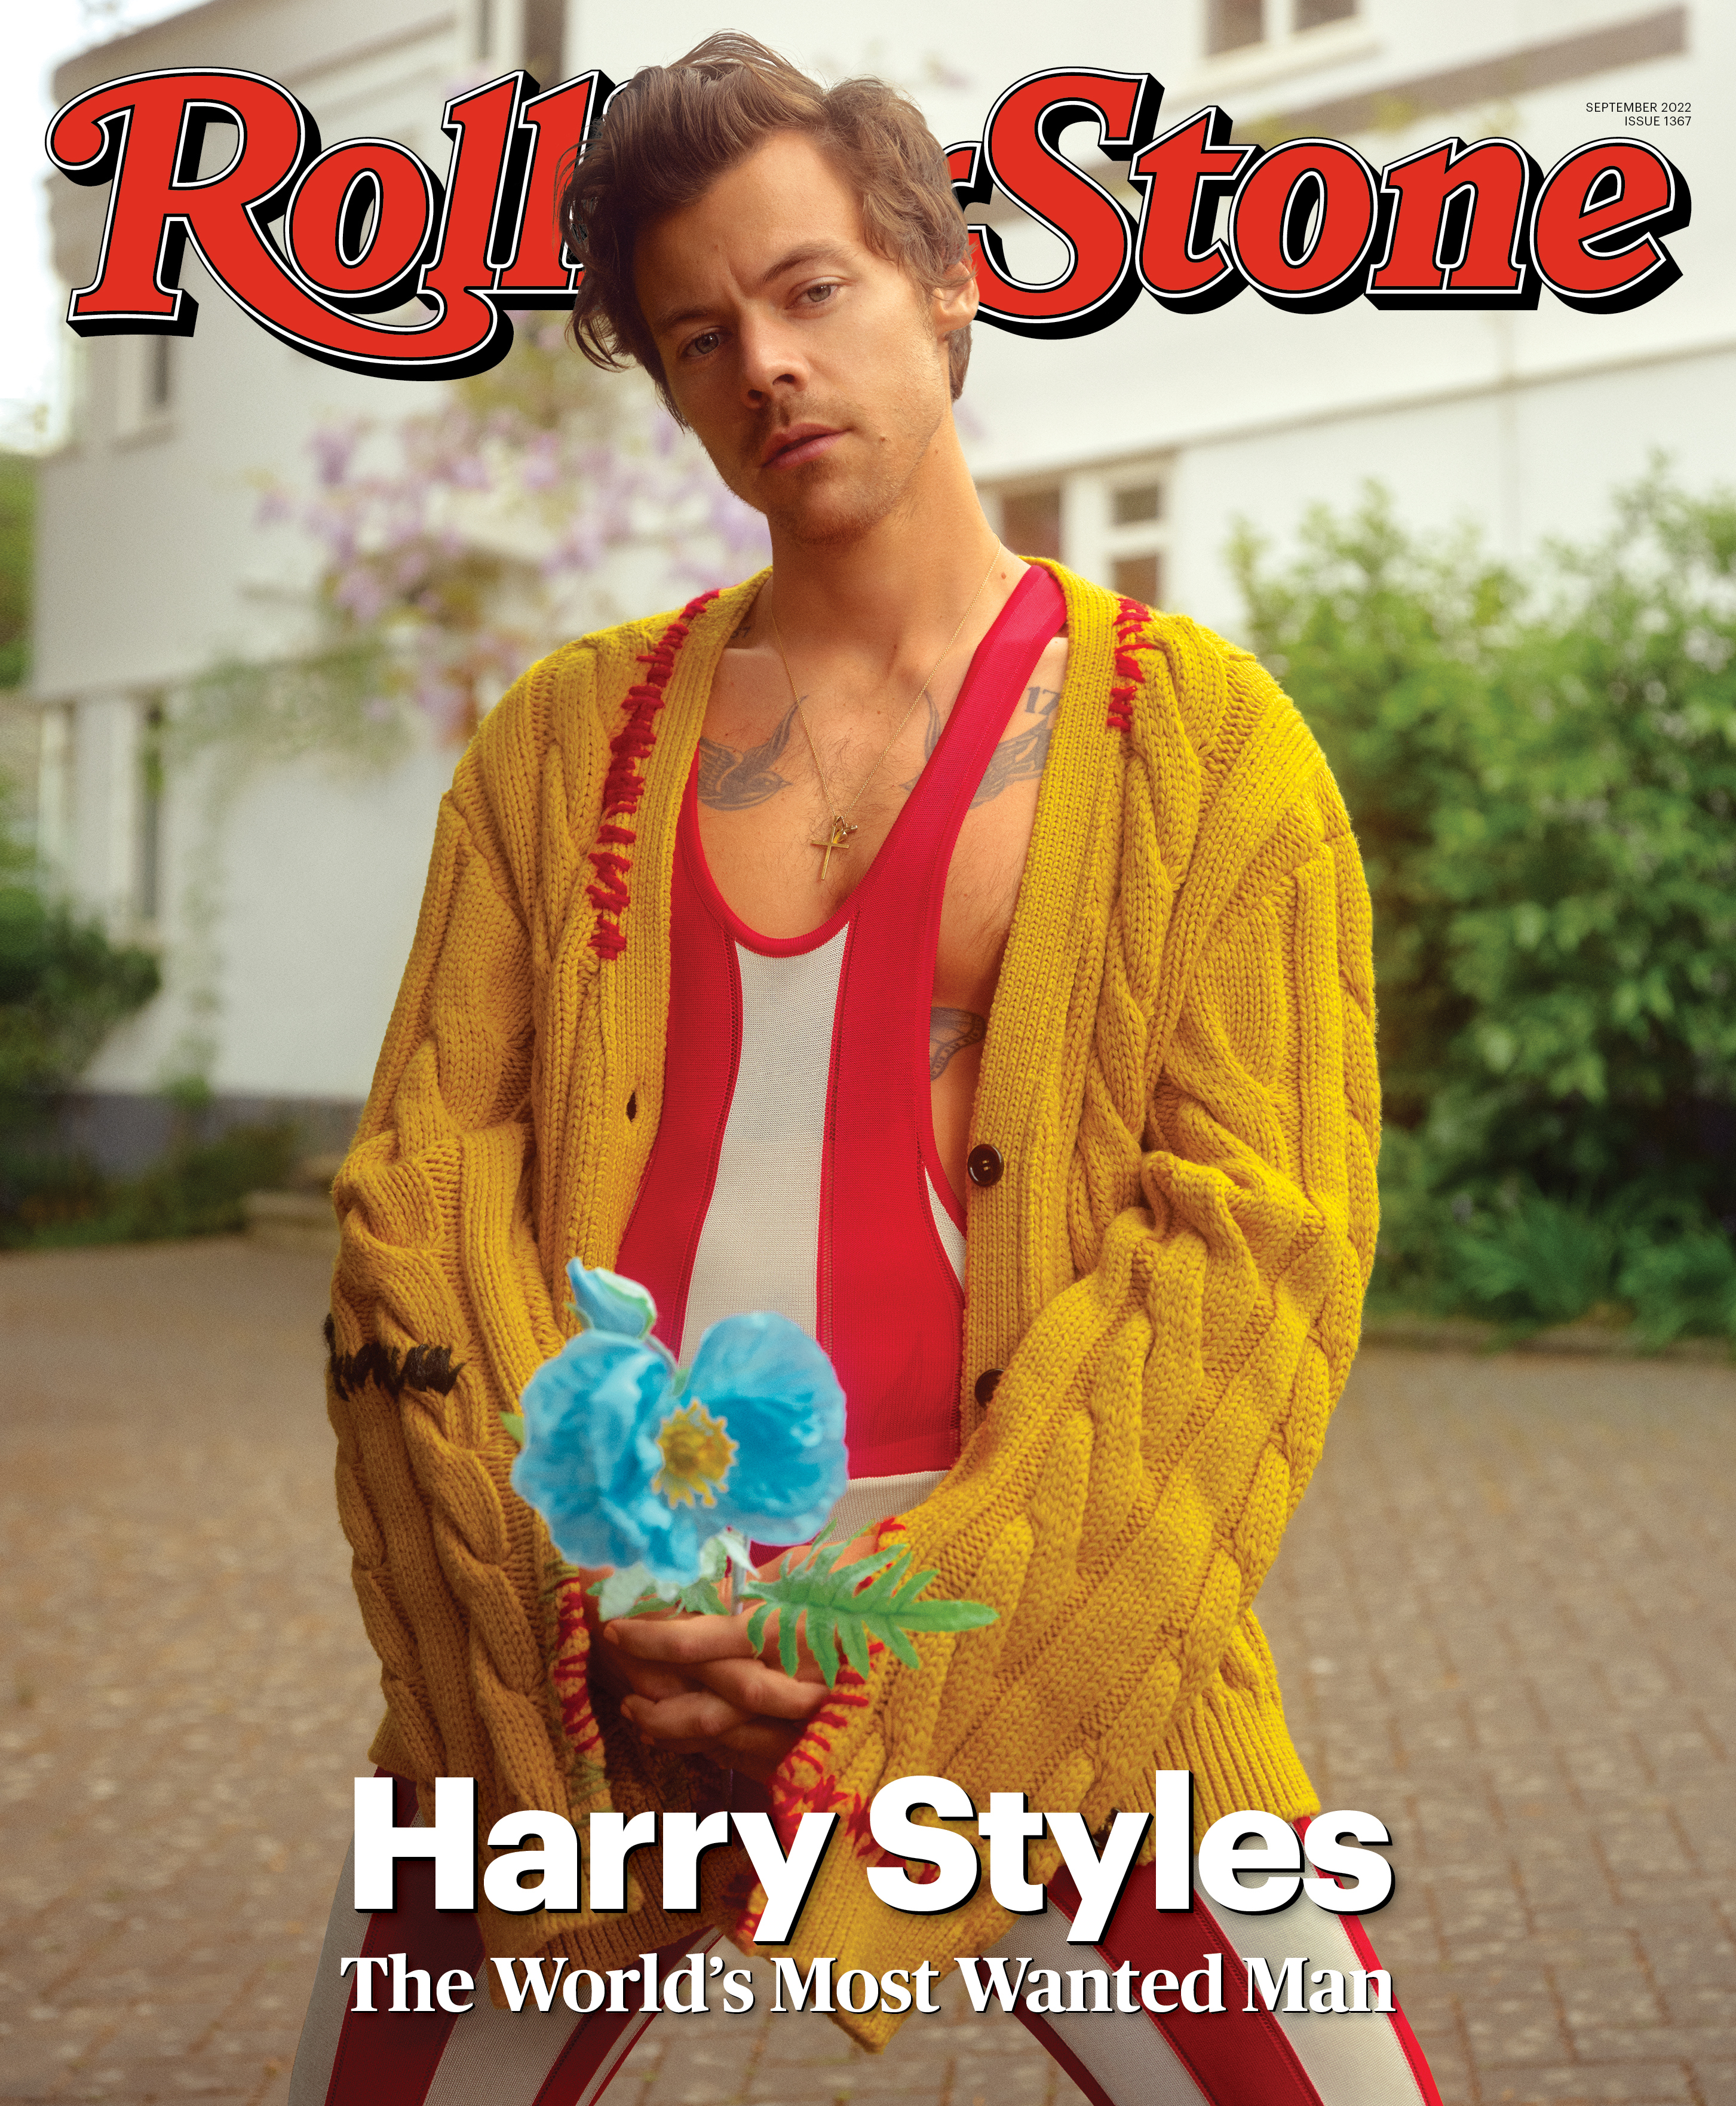 Rolling Stone “Harry Styles” September 2022